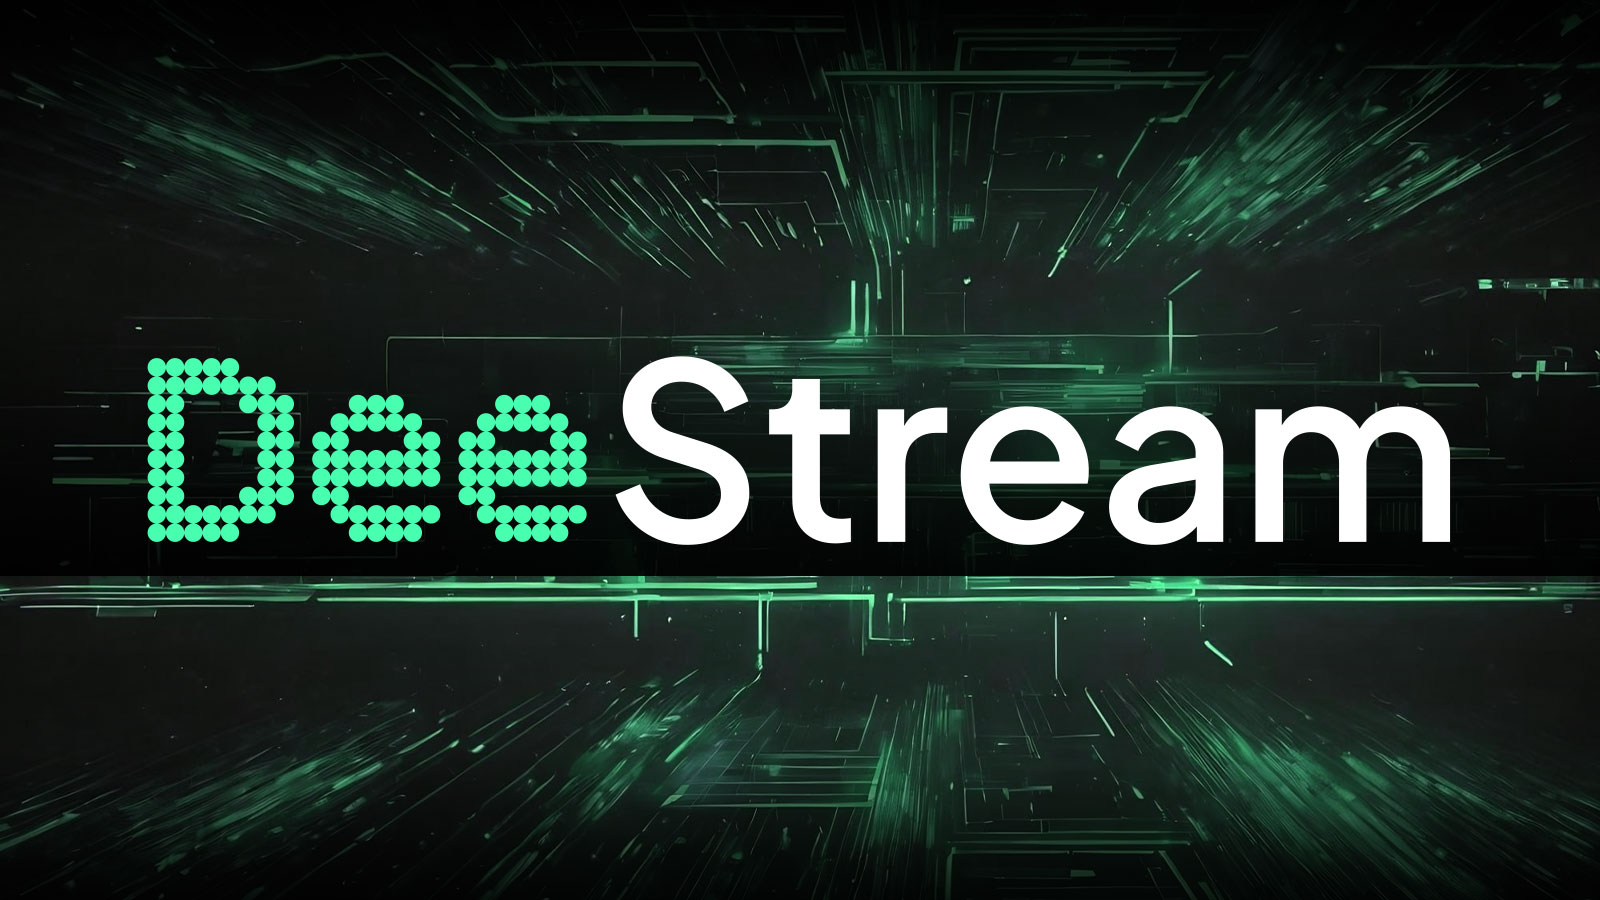 DeeStream (DST) Pre-Sale New Phase Welcomes Investors as Shiba Inu (SHIB), Ethereum (ETH) Target Bullish February